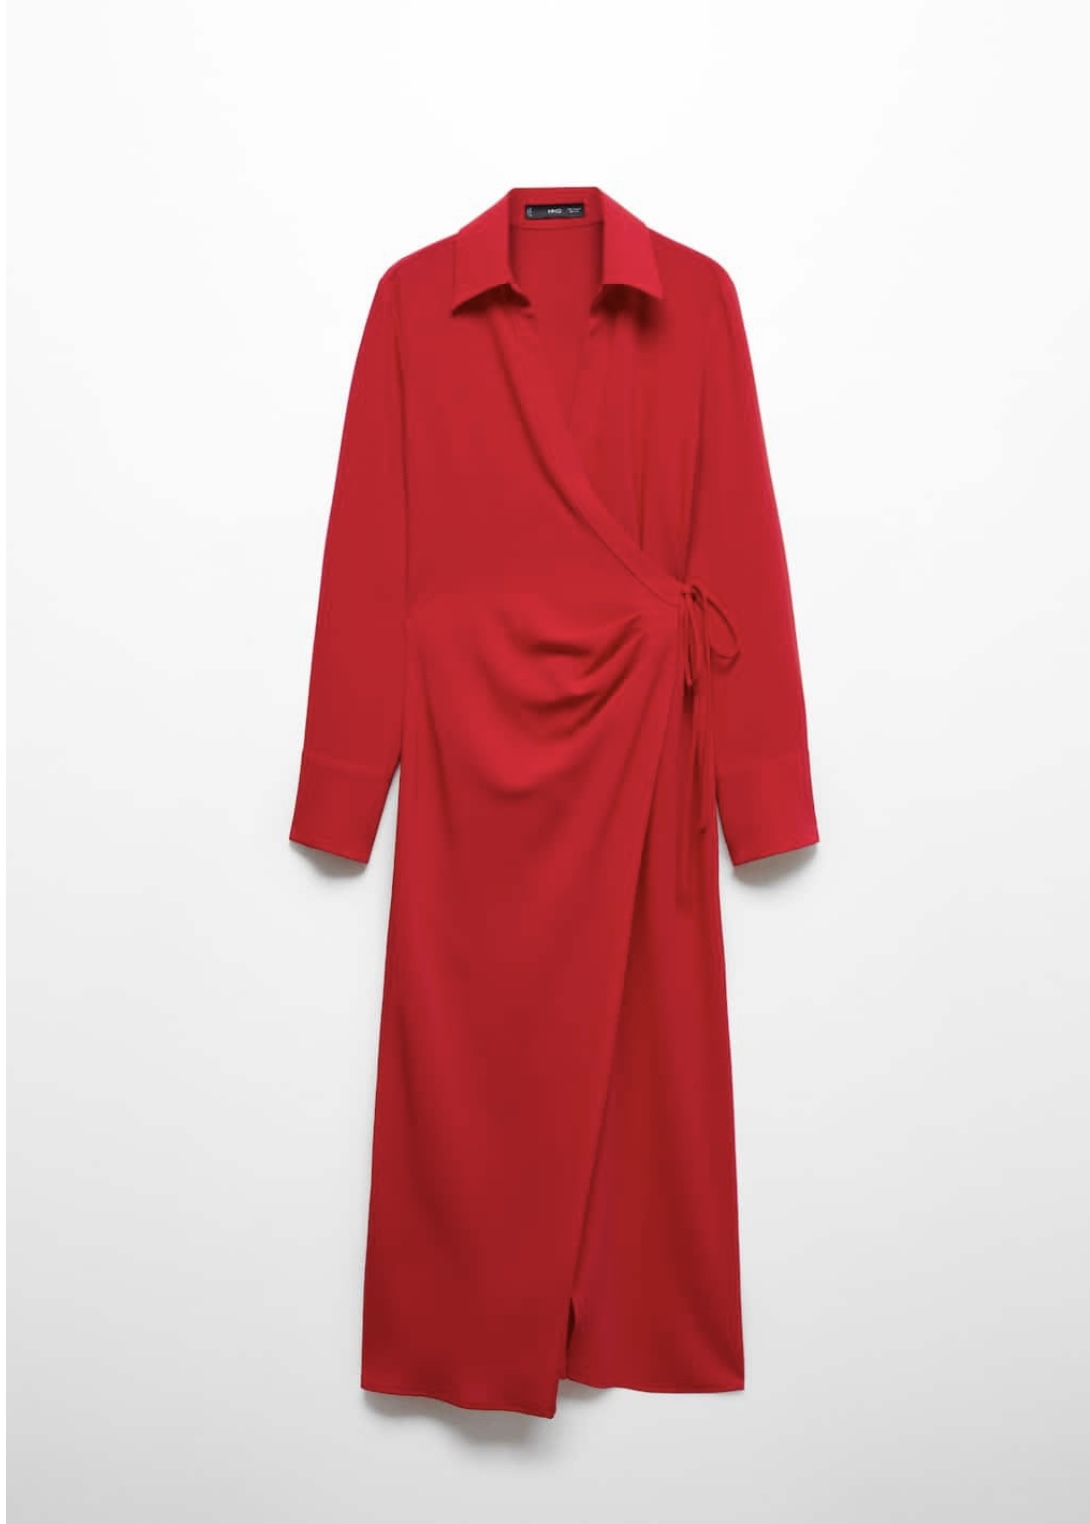 Vestido camisero rojo de Mango (49,99 euros)